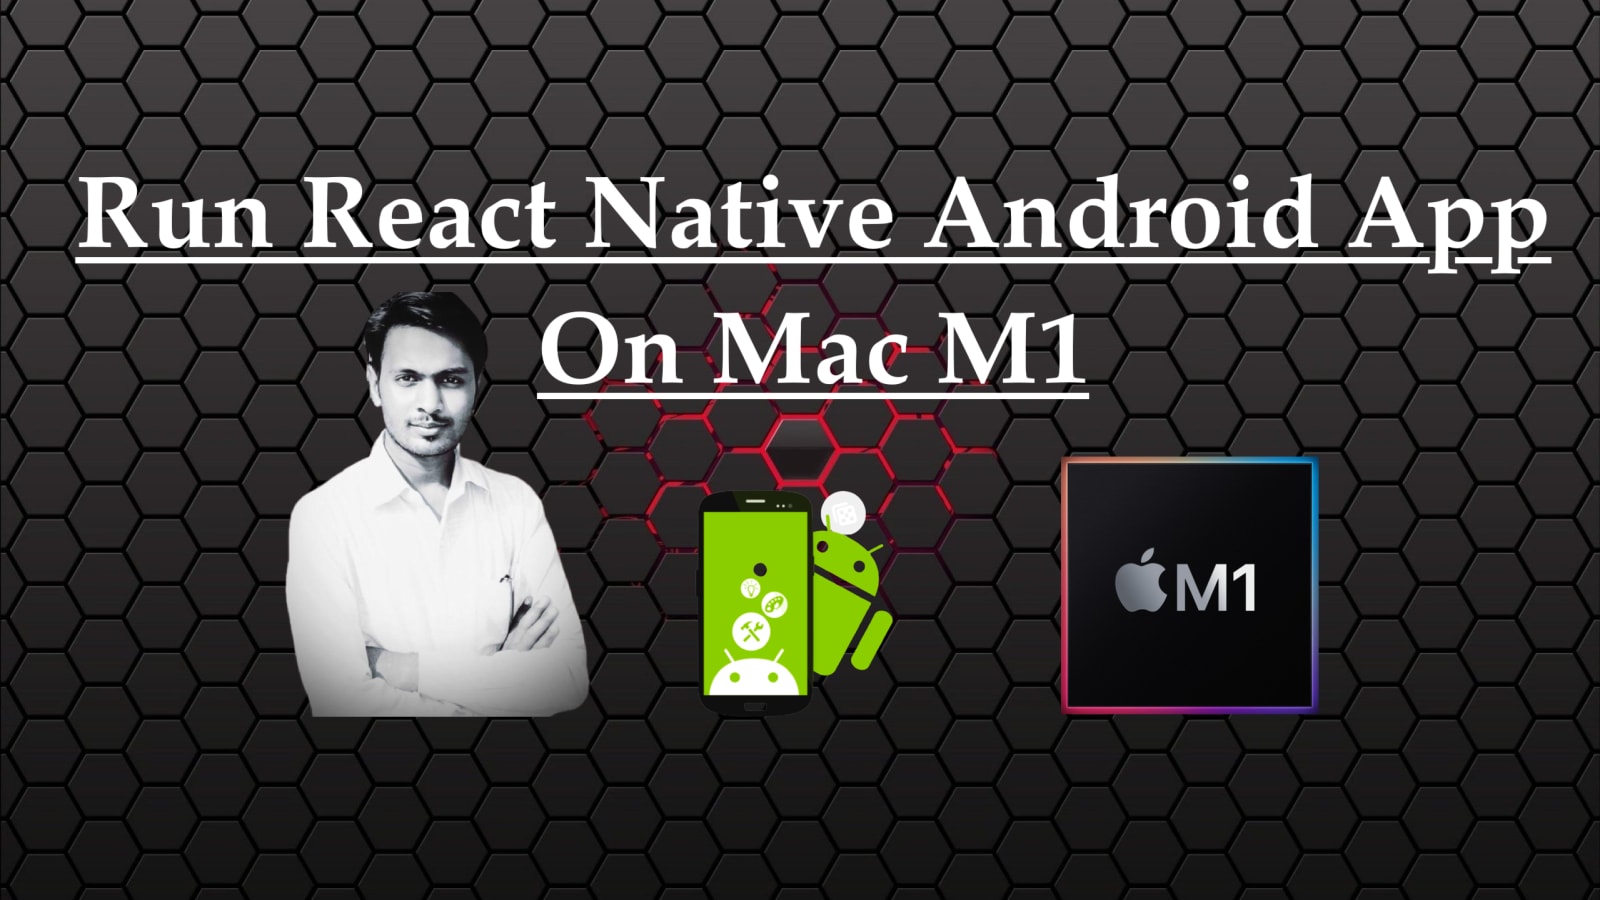 android emulator react native mac